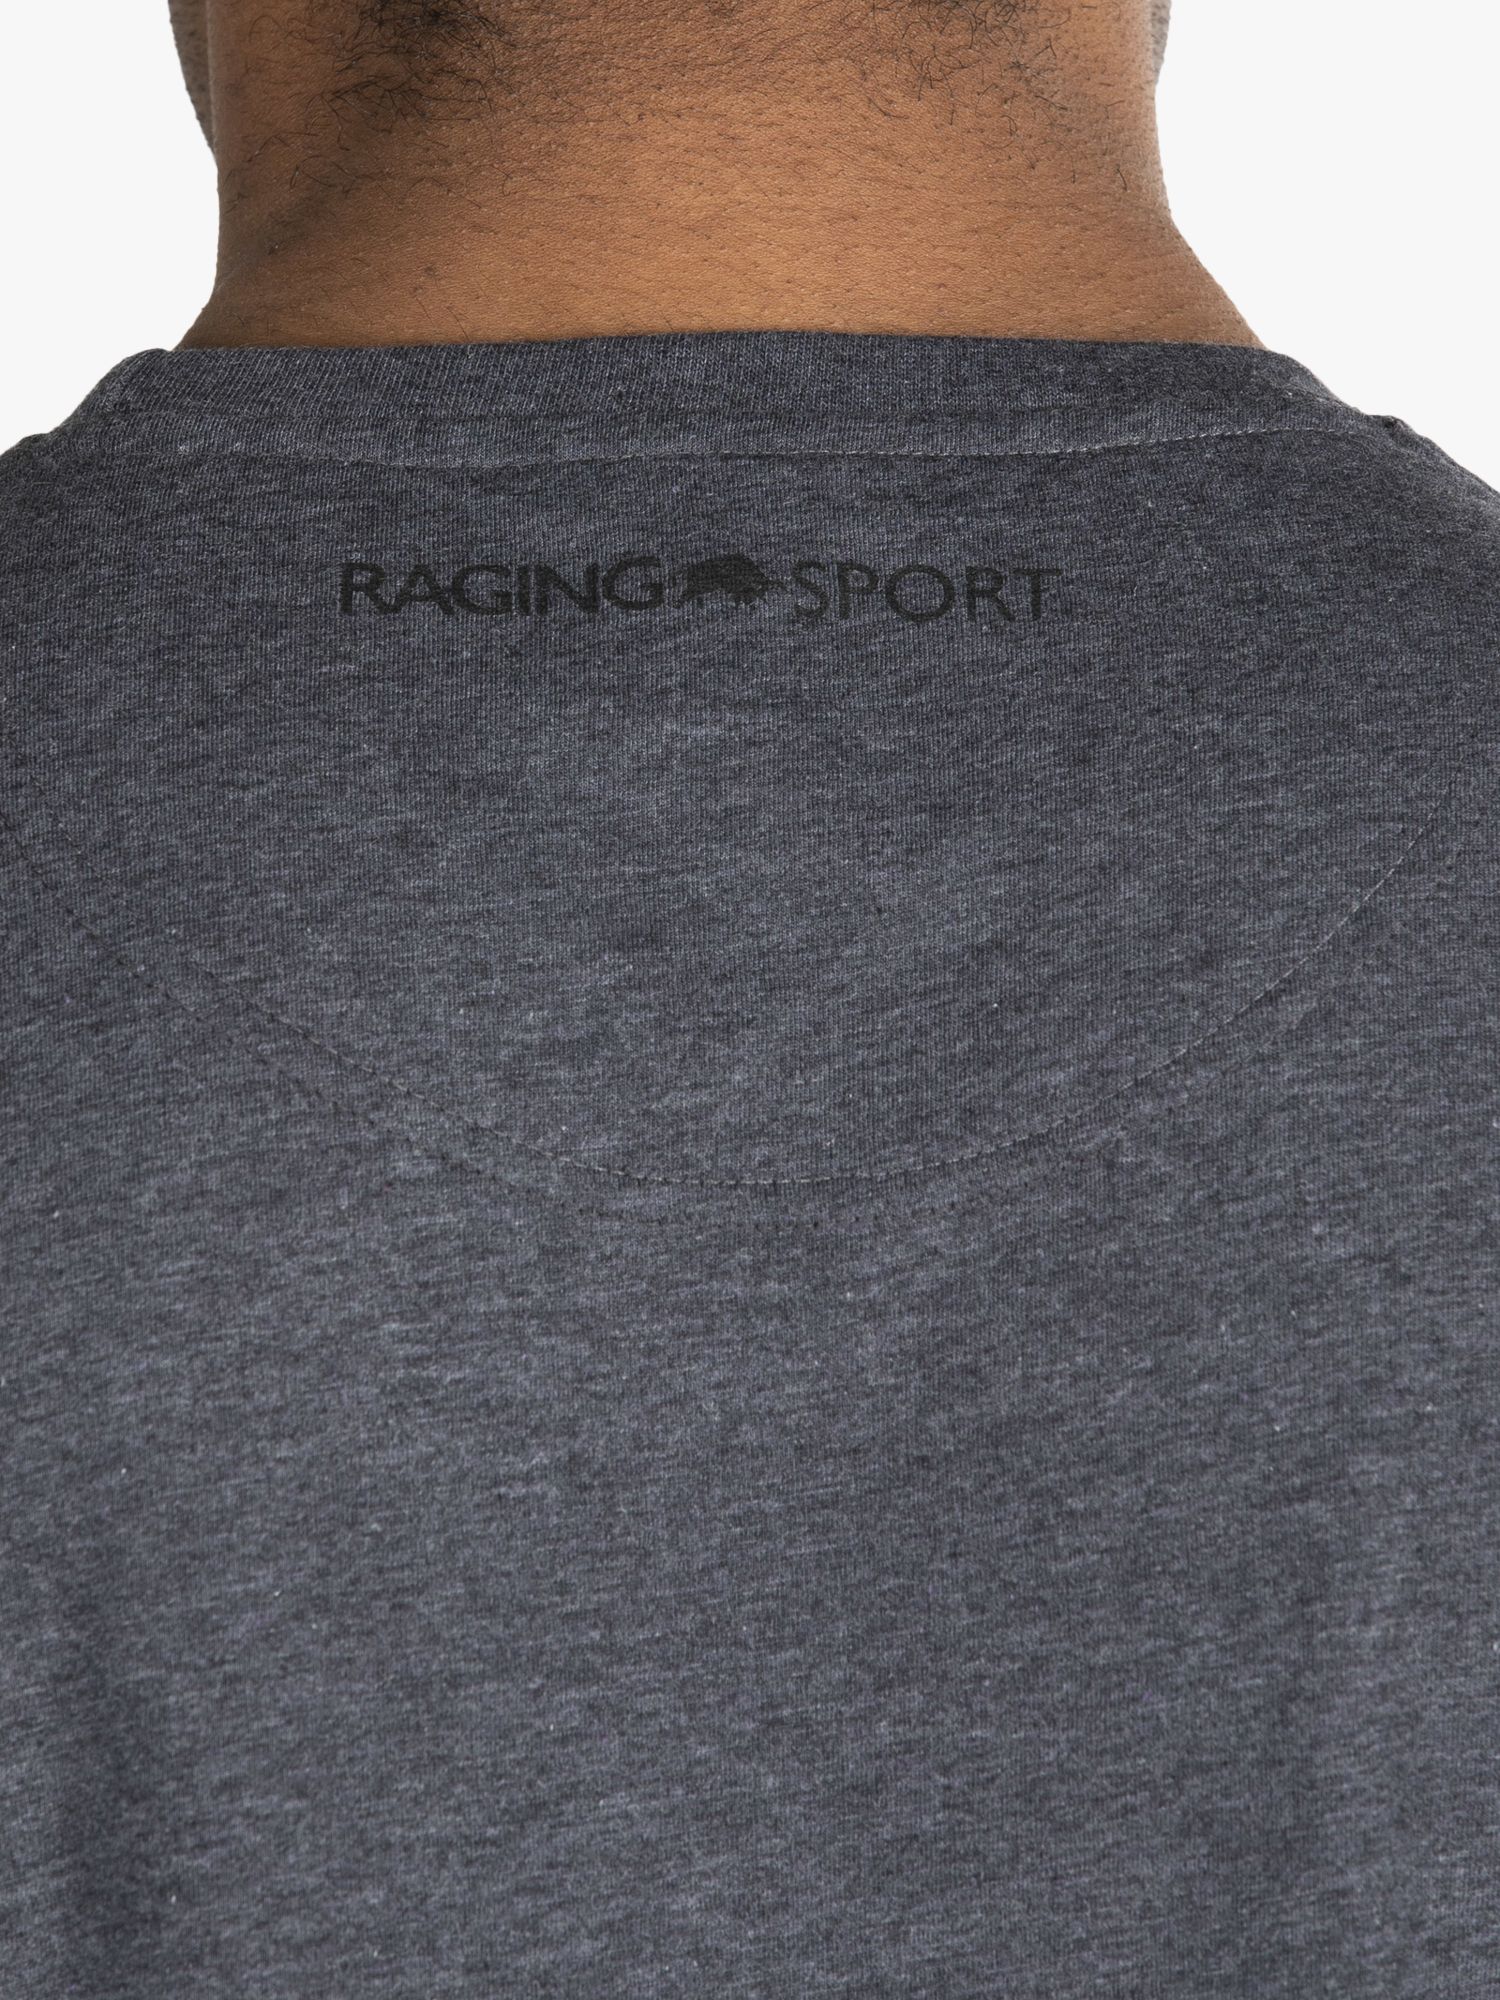 Raging Bull Casual Sport Logo T-Shirt, Dark Grey Marl at John Lewis ...